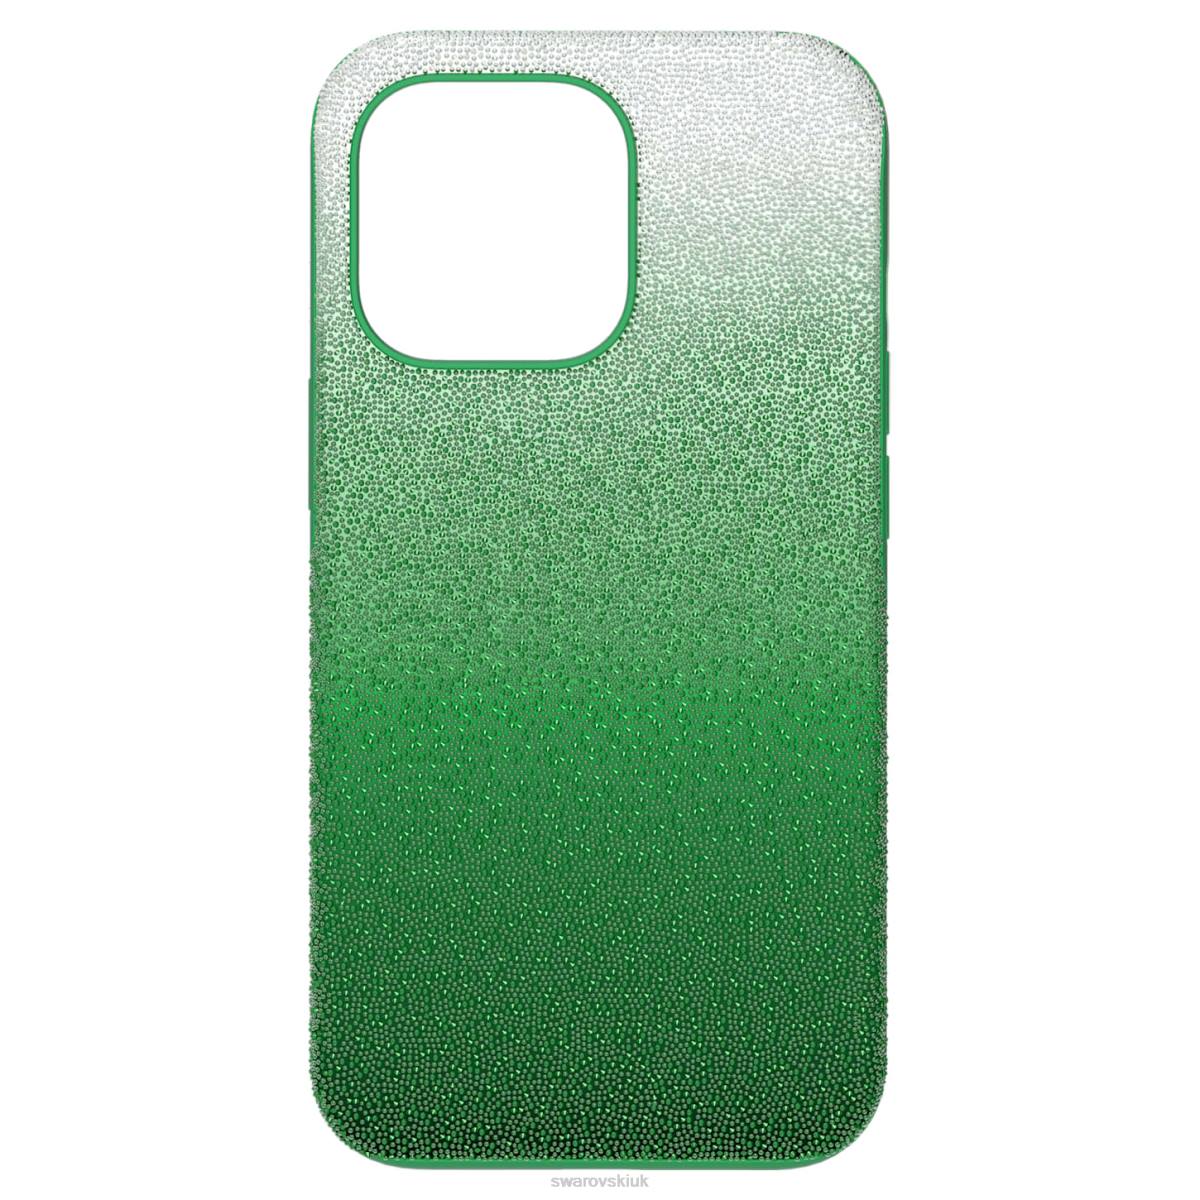 Accessories Swarovski High smartphone case I Green 48JX1342